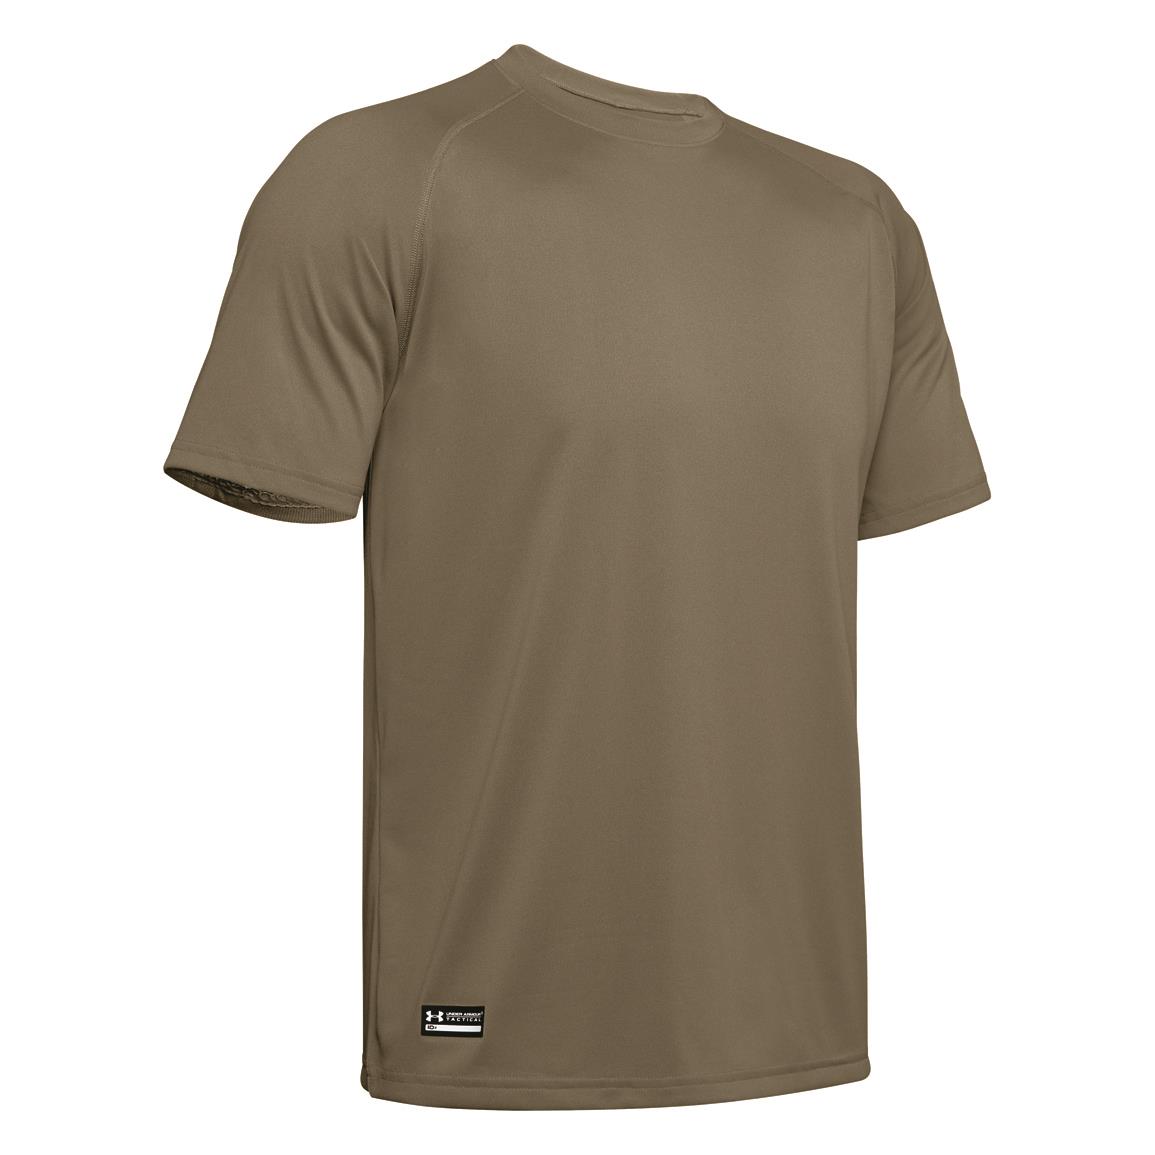 Under Armour Men's Tactical Tech Short Sleeve T-Shirt, Federal Tan / None